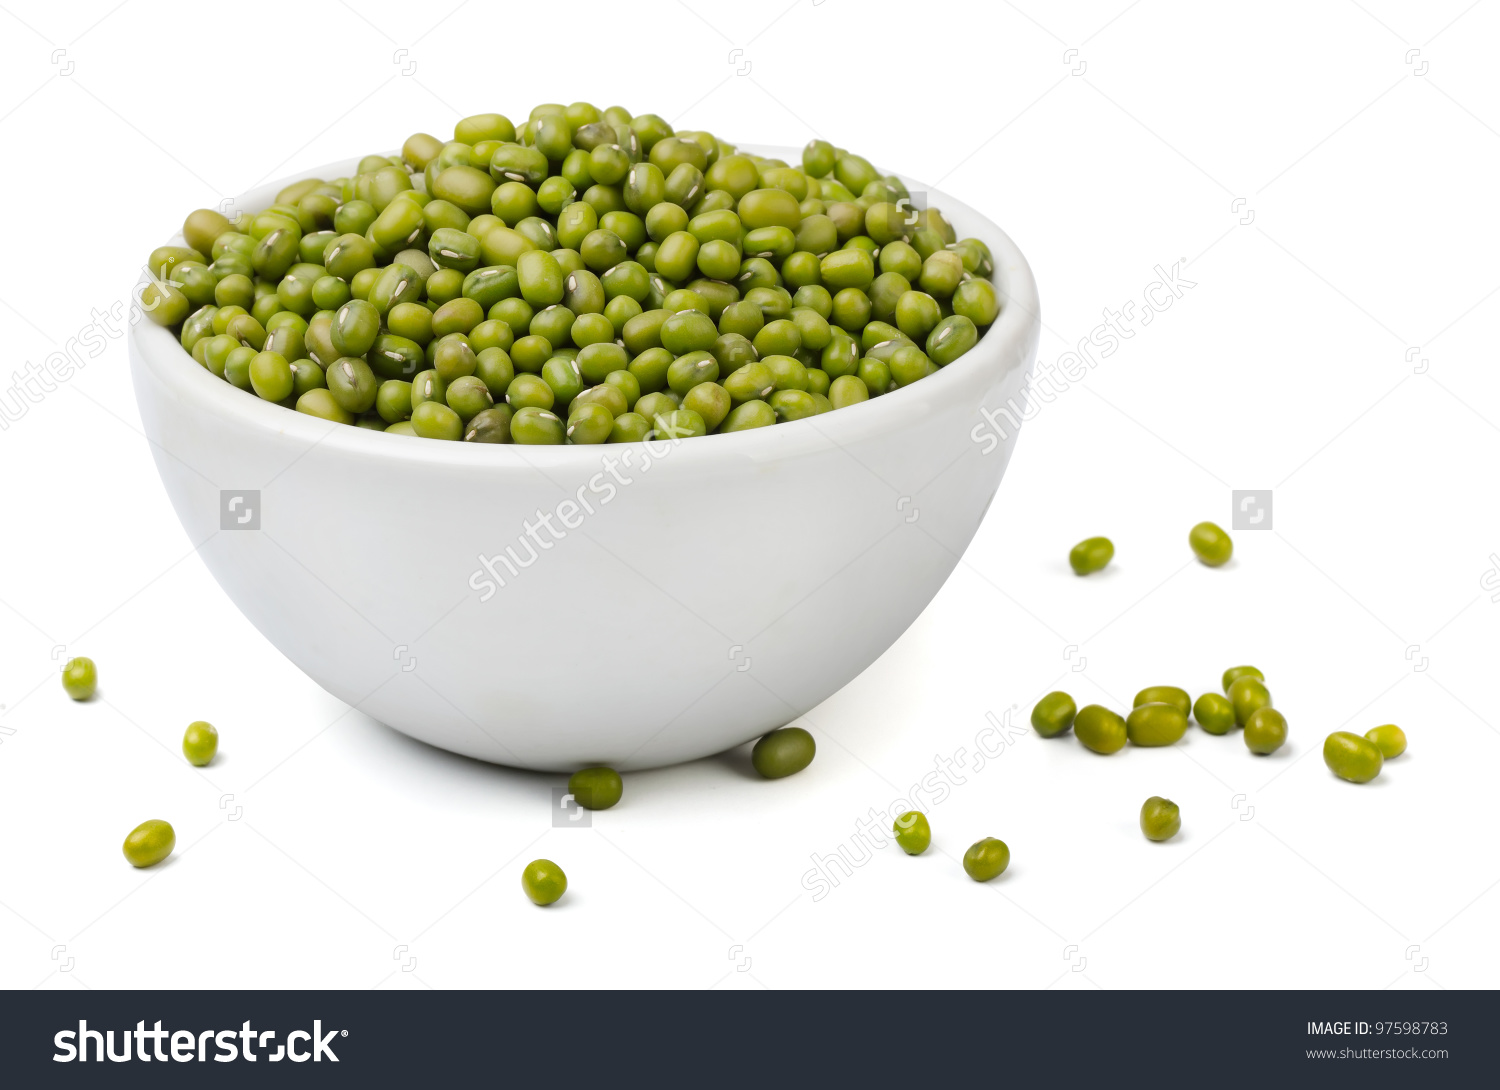 Bean clipart pea. Mongo beans clipground green